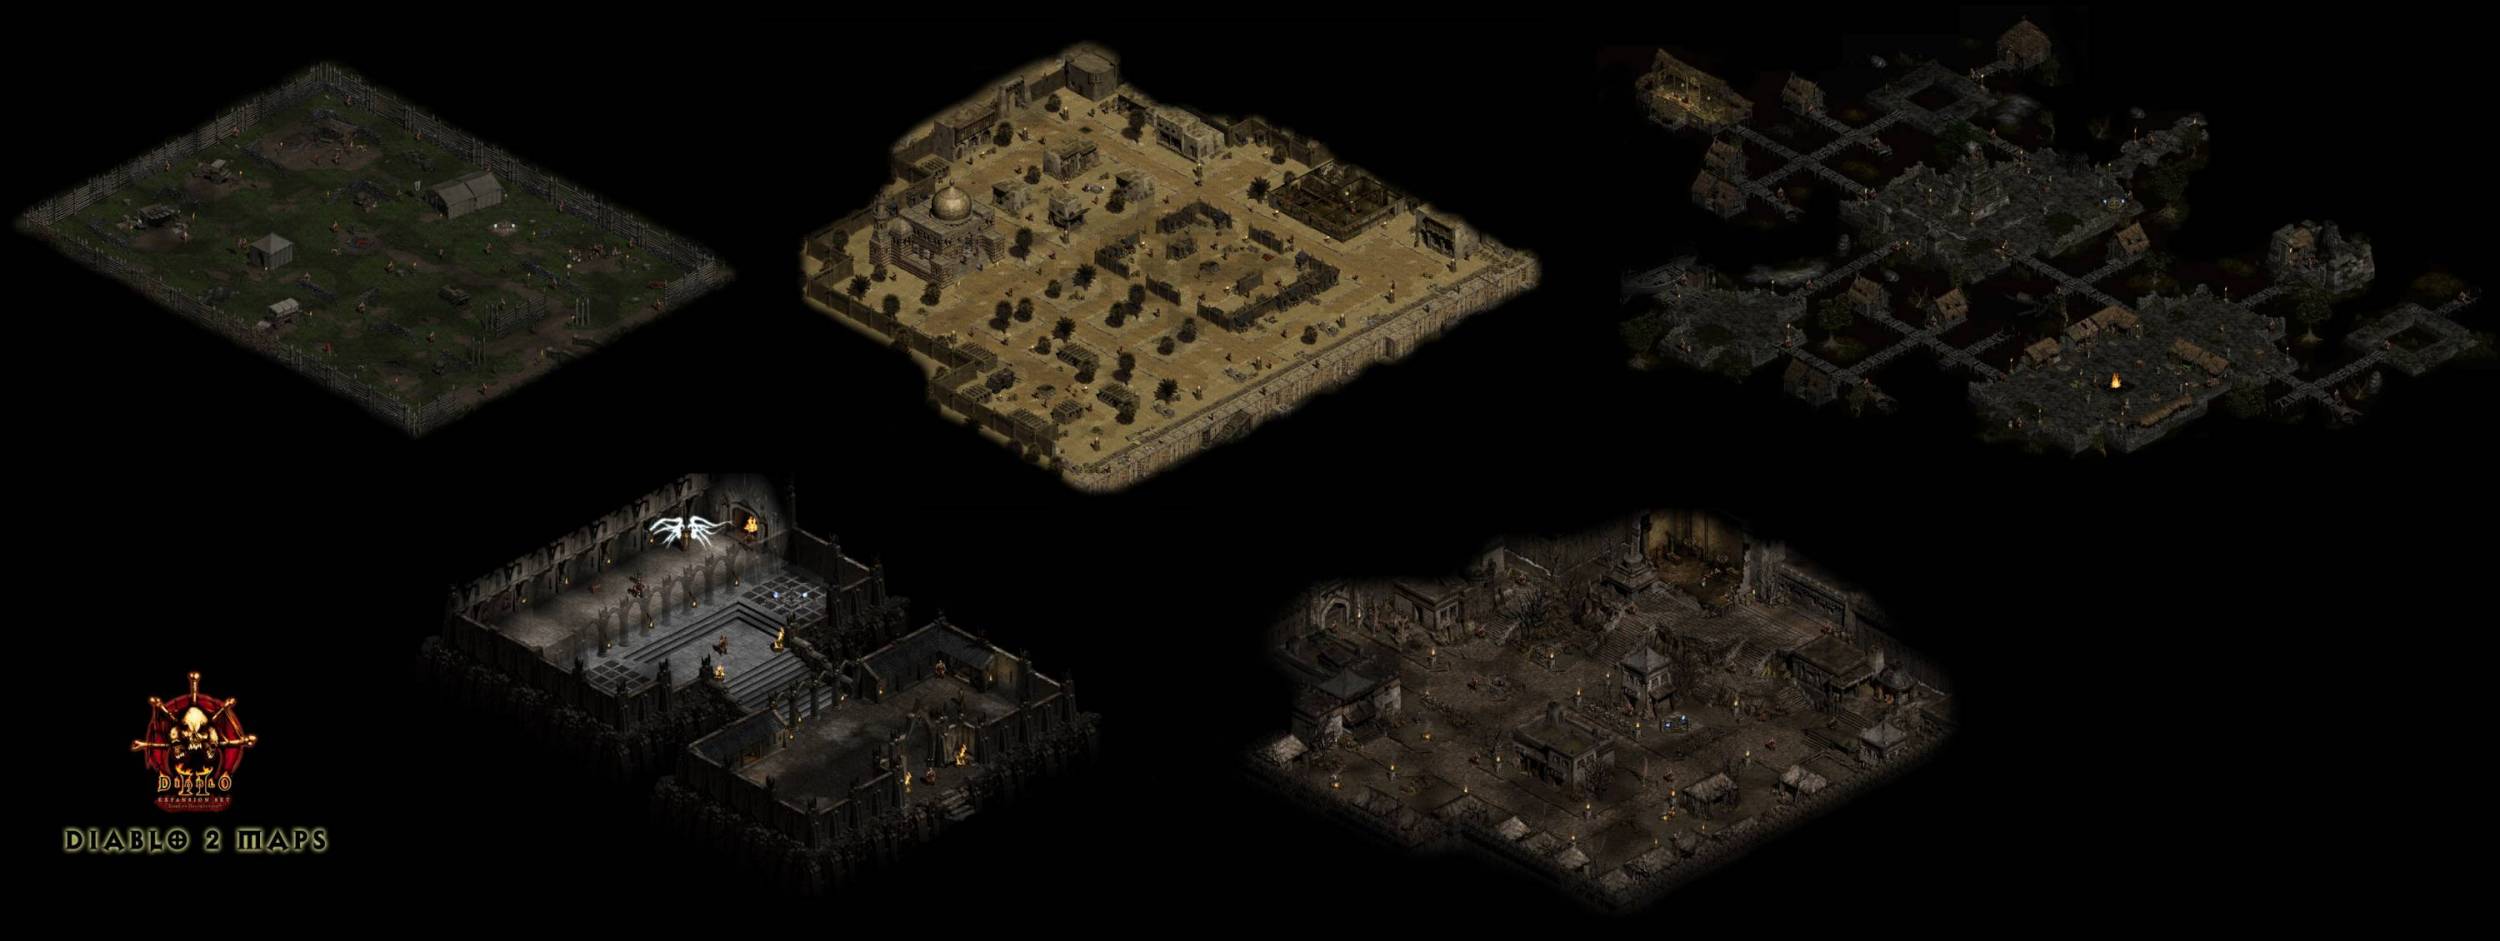 Diablo 2 Towns